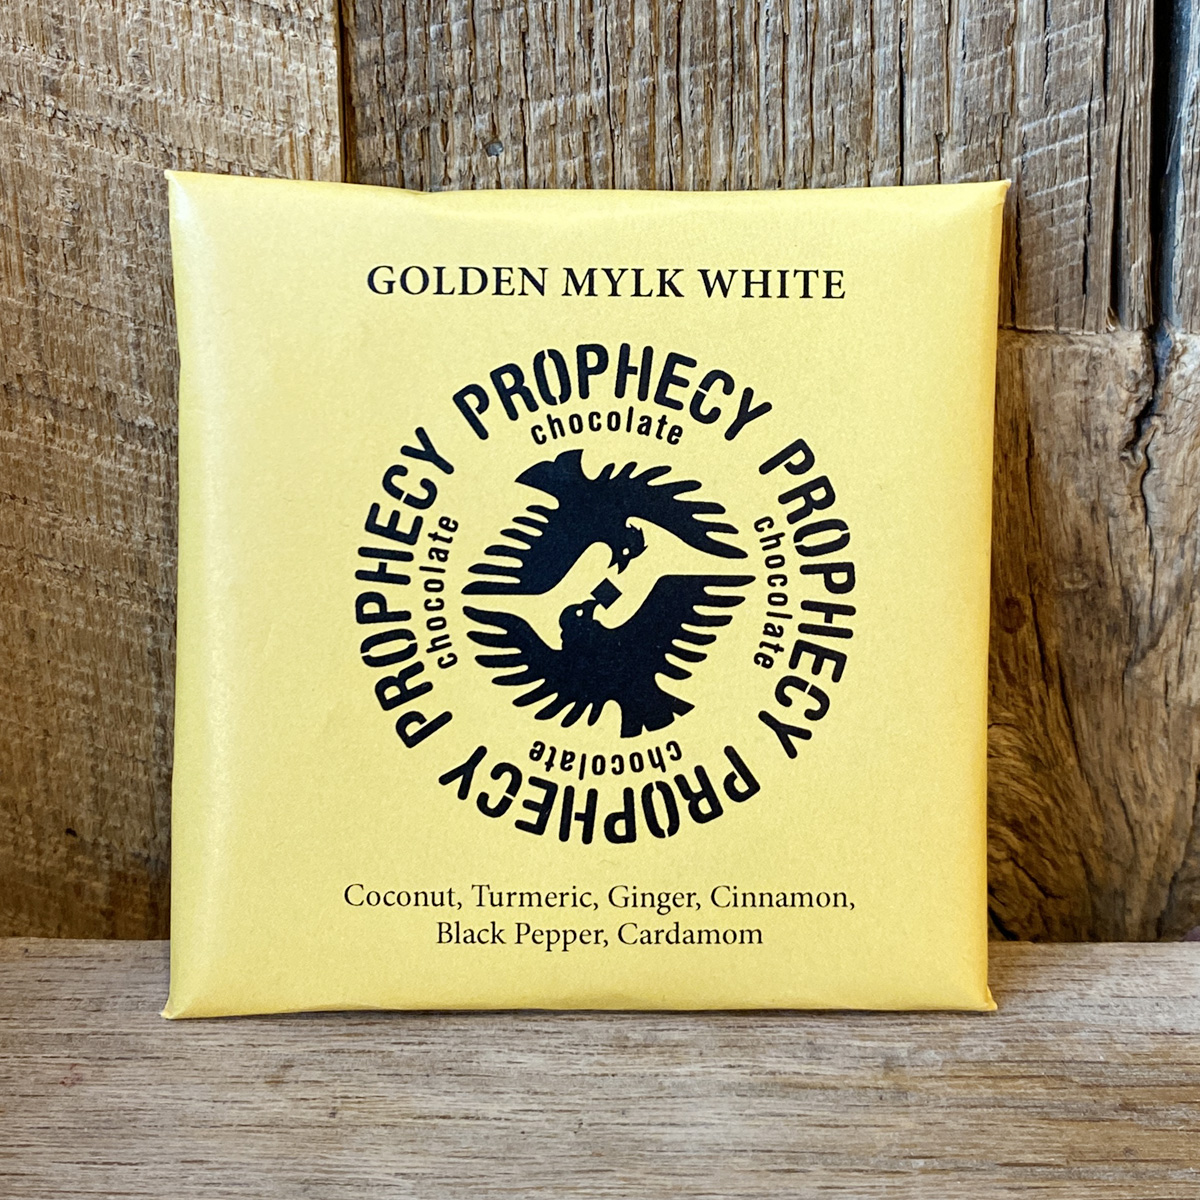 prophecy-chocolate-golden-mylk-white-gal1